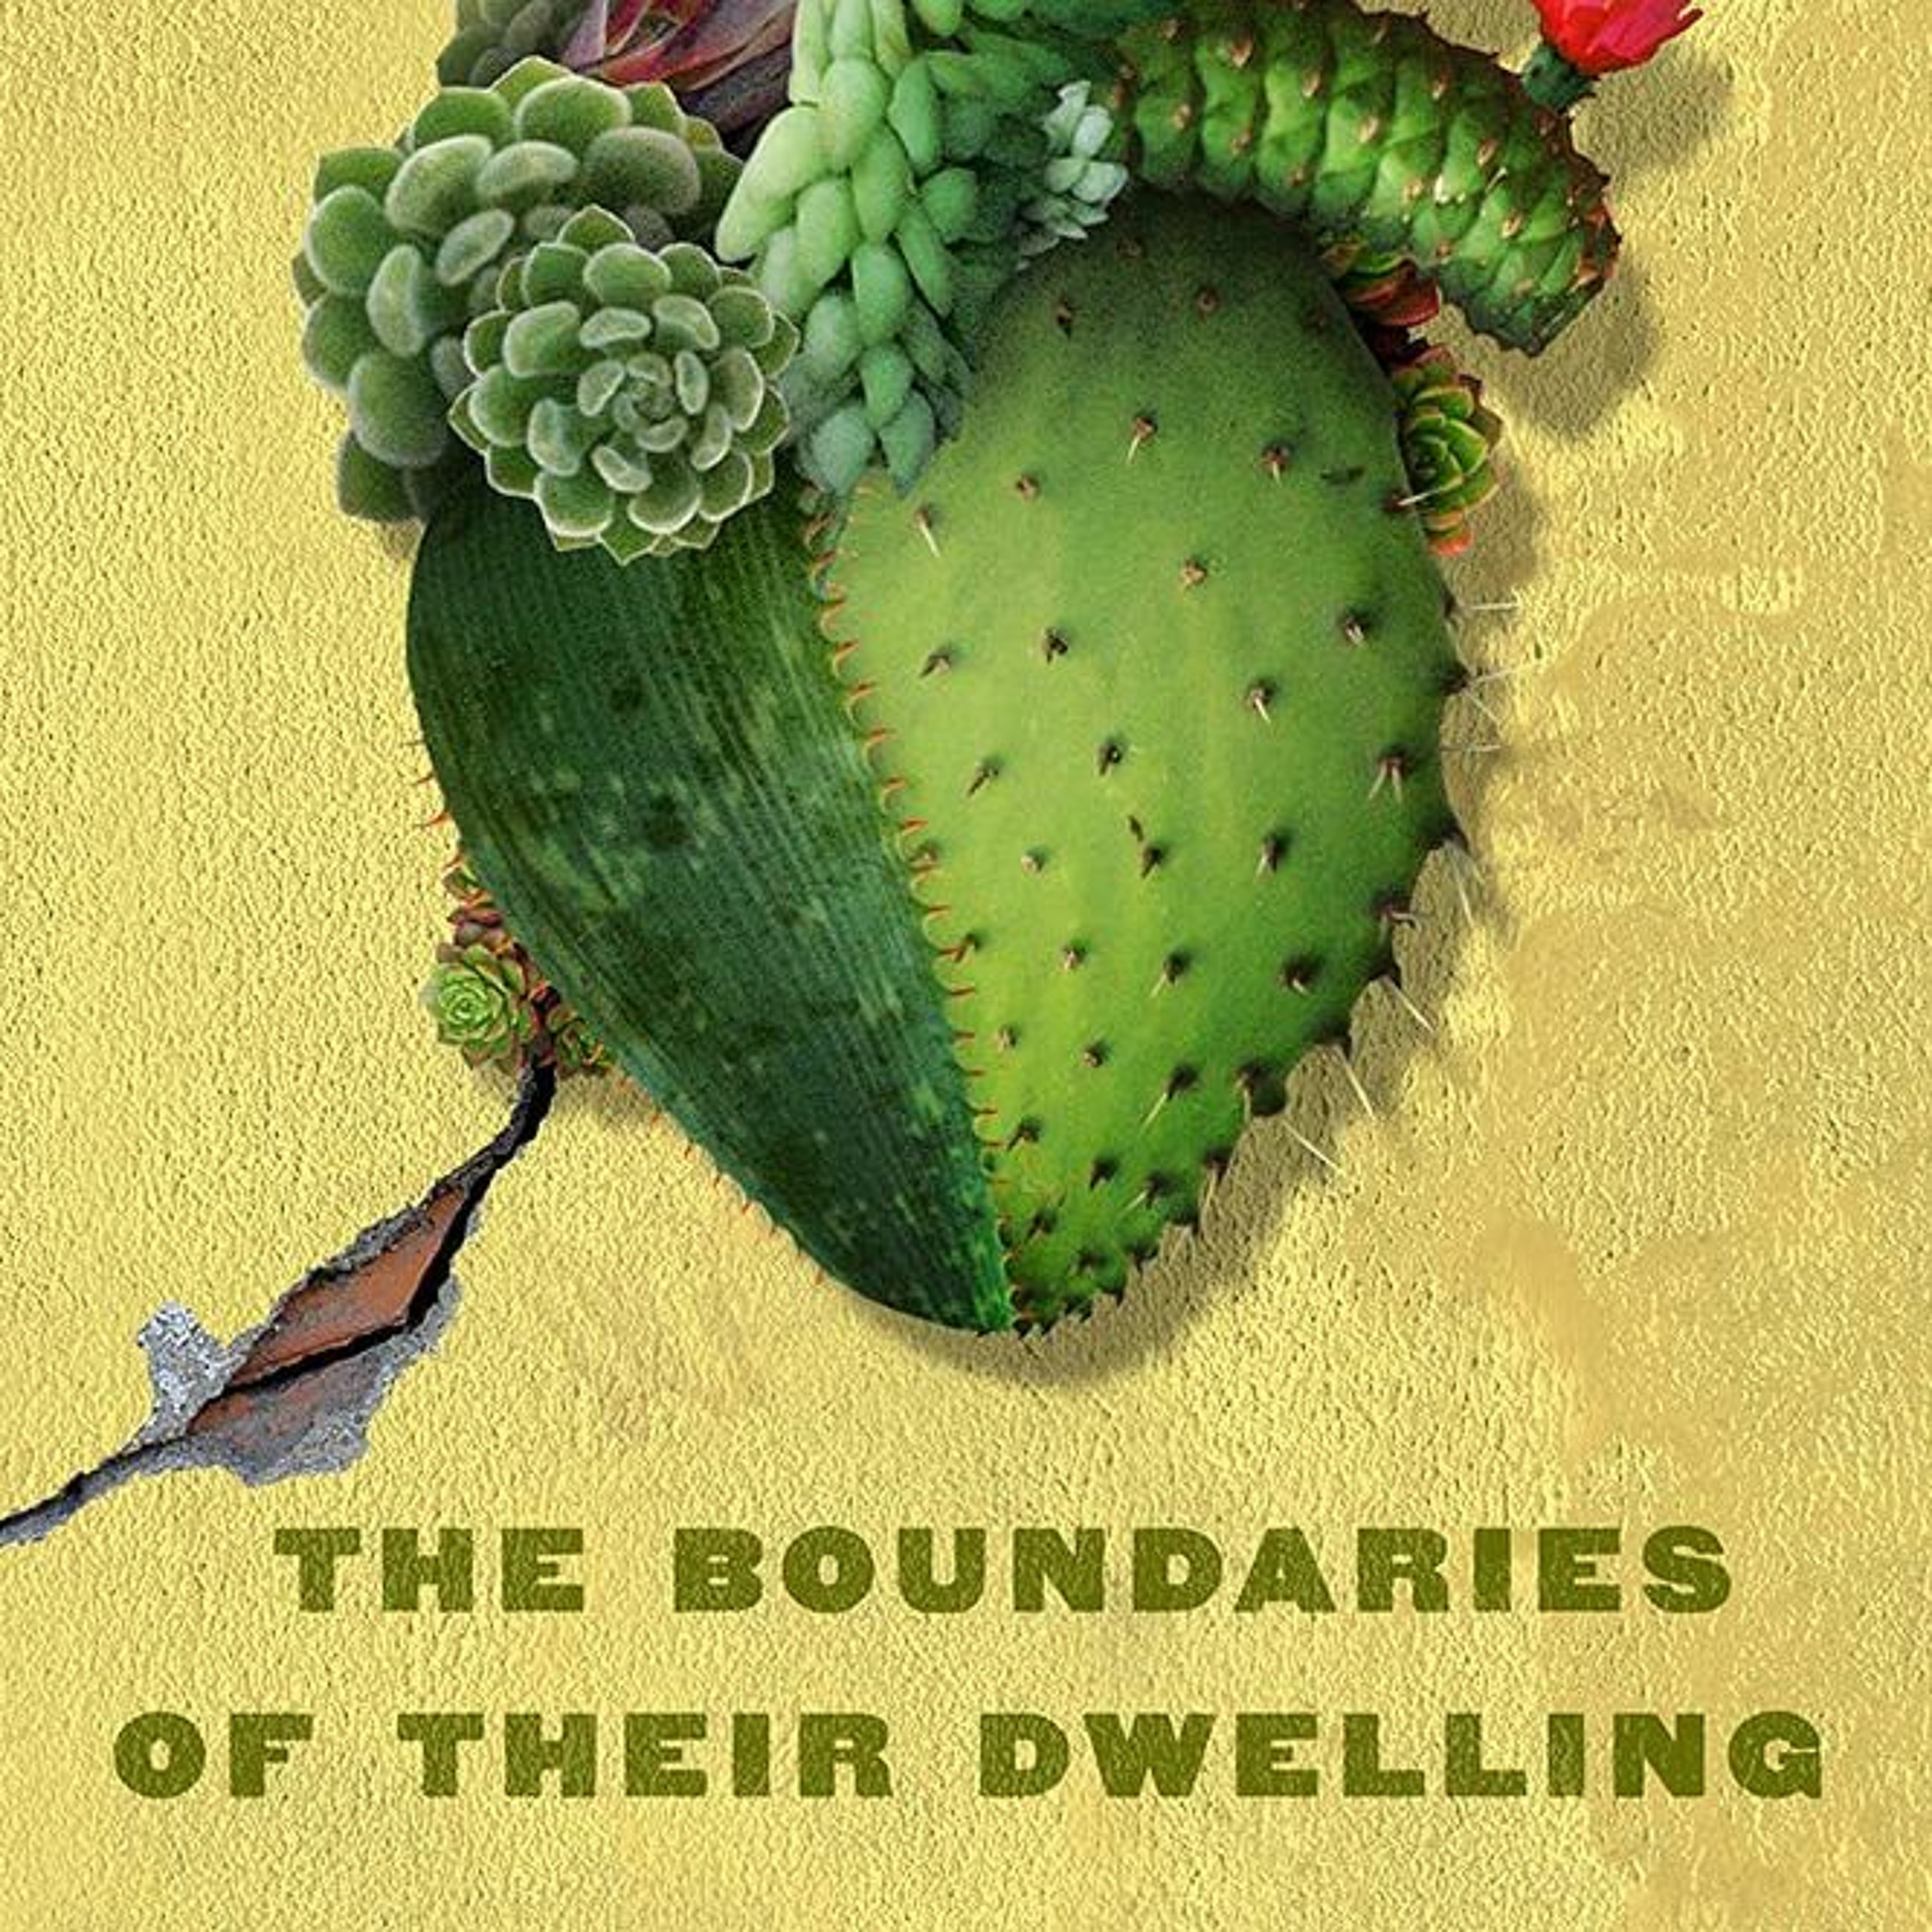 The Boundaries of Their Dwelling by Blake Sanz